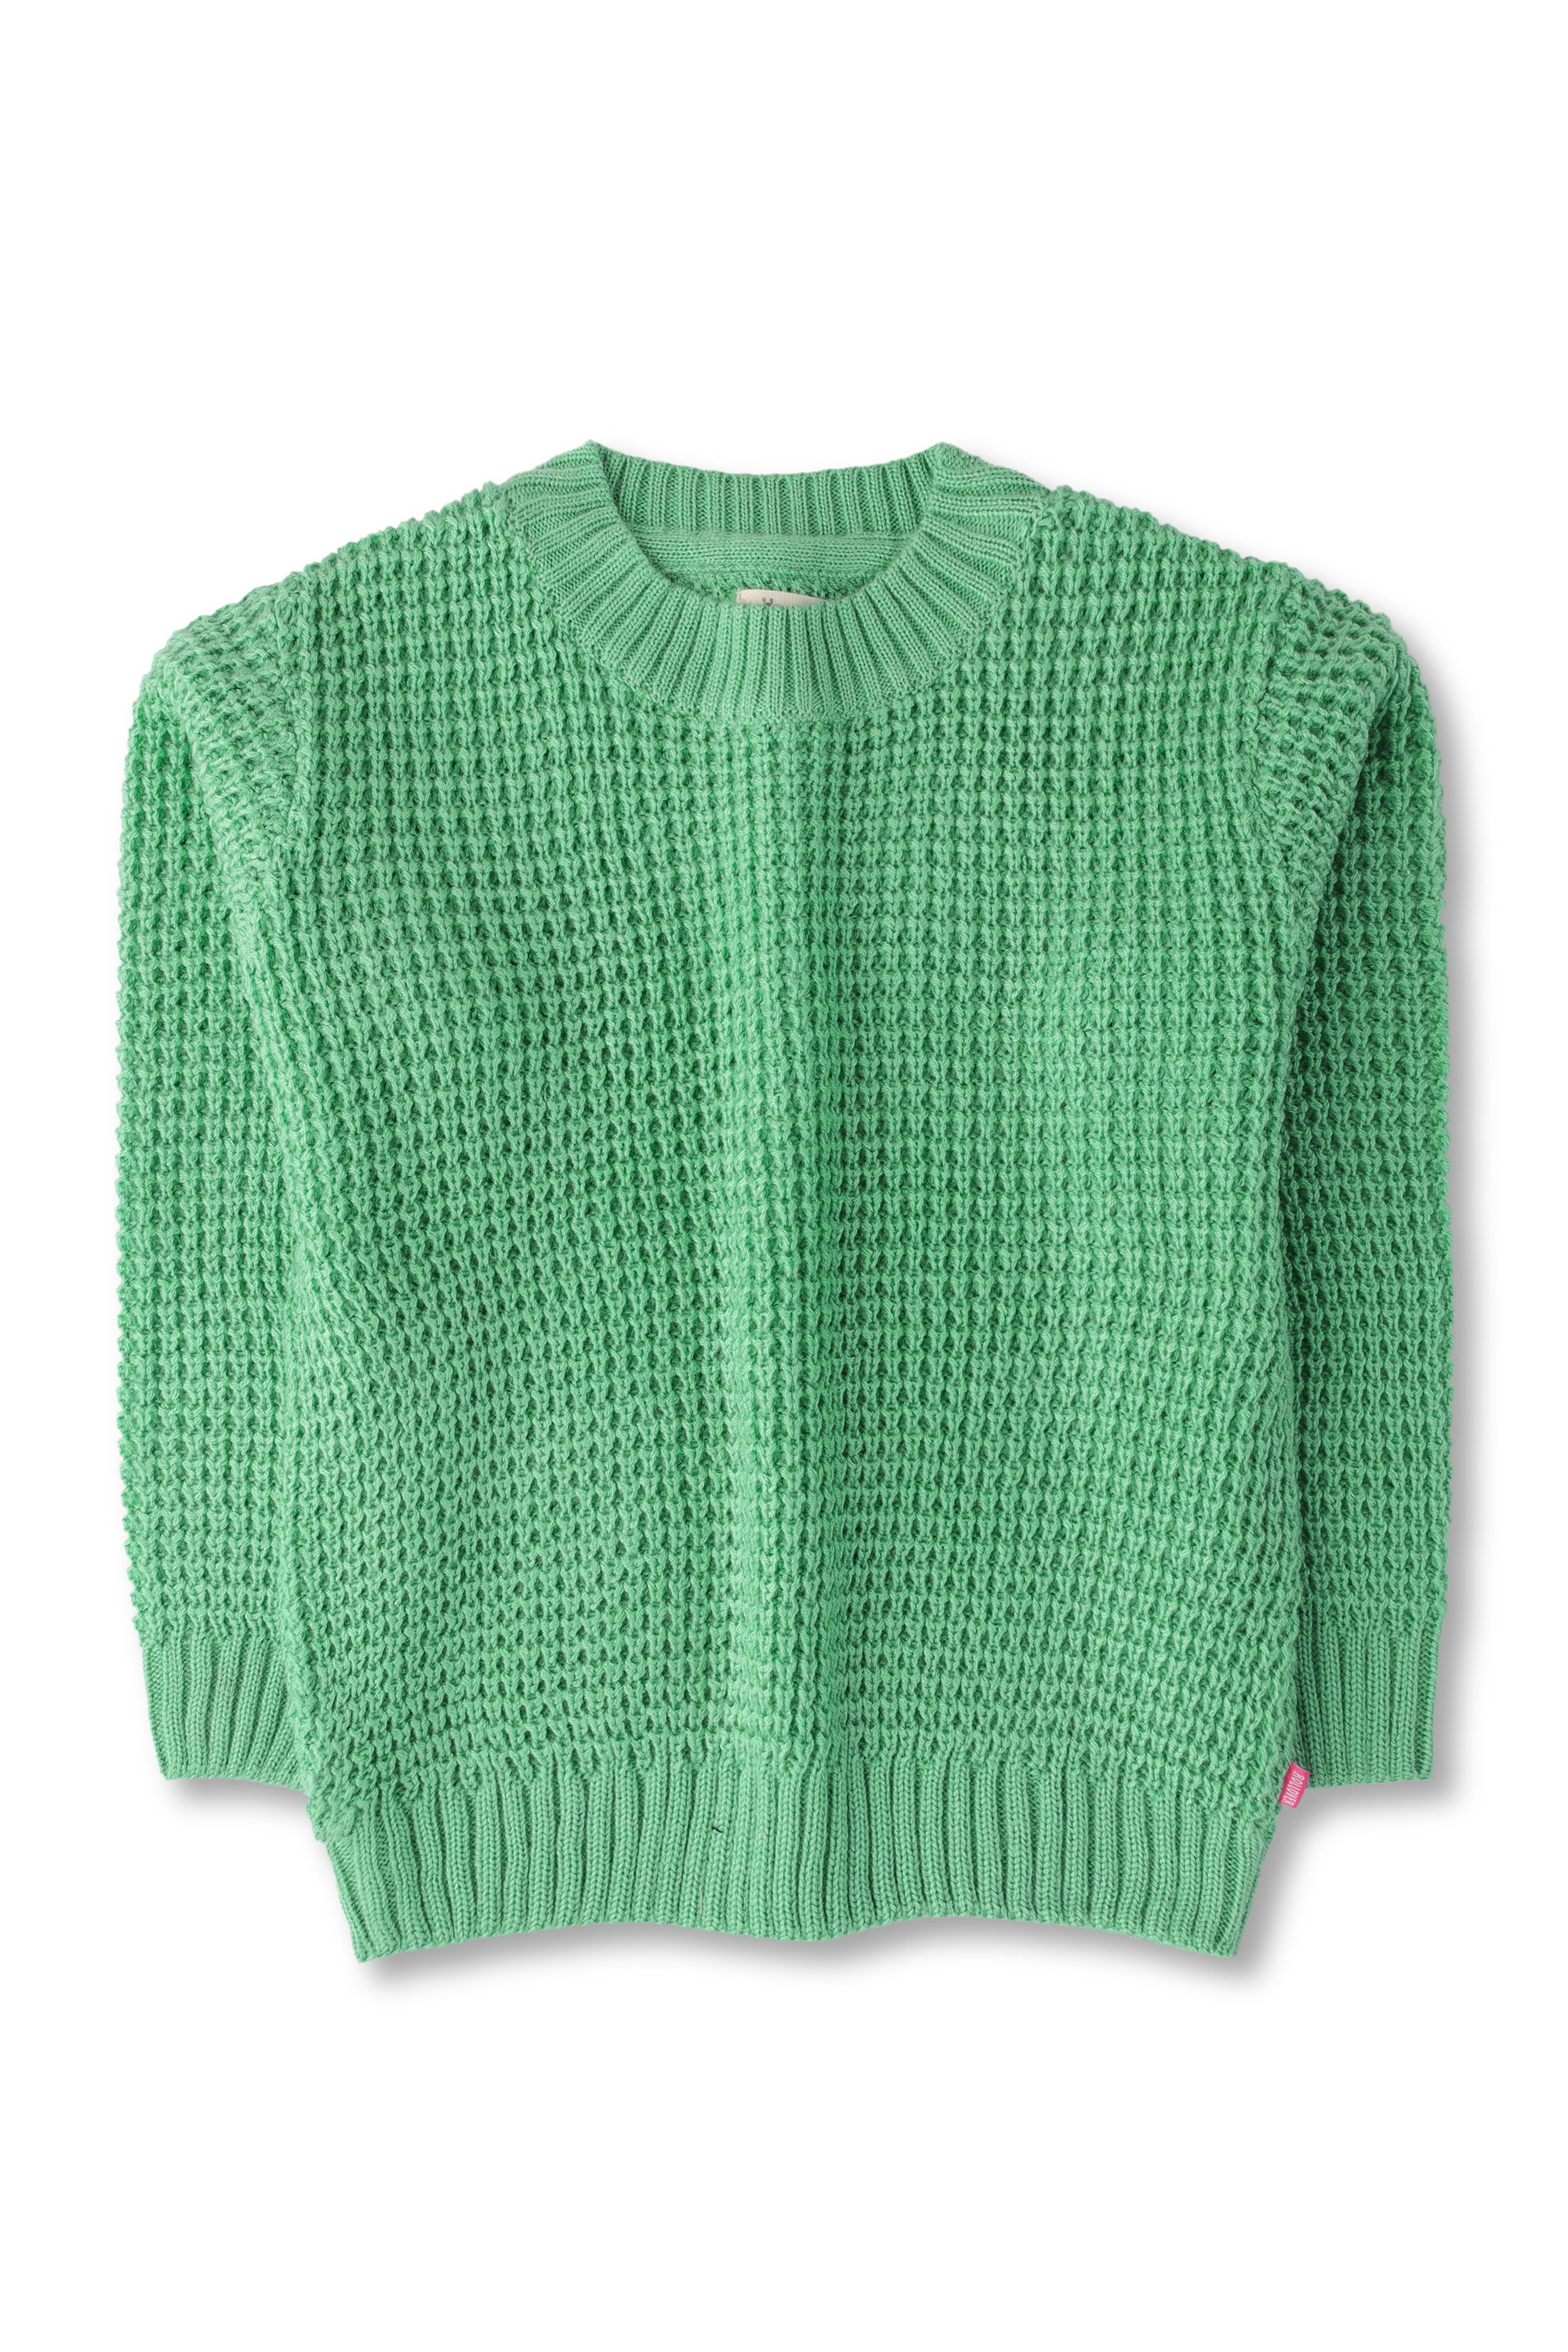 Girls Green Knit Sweater